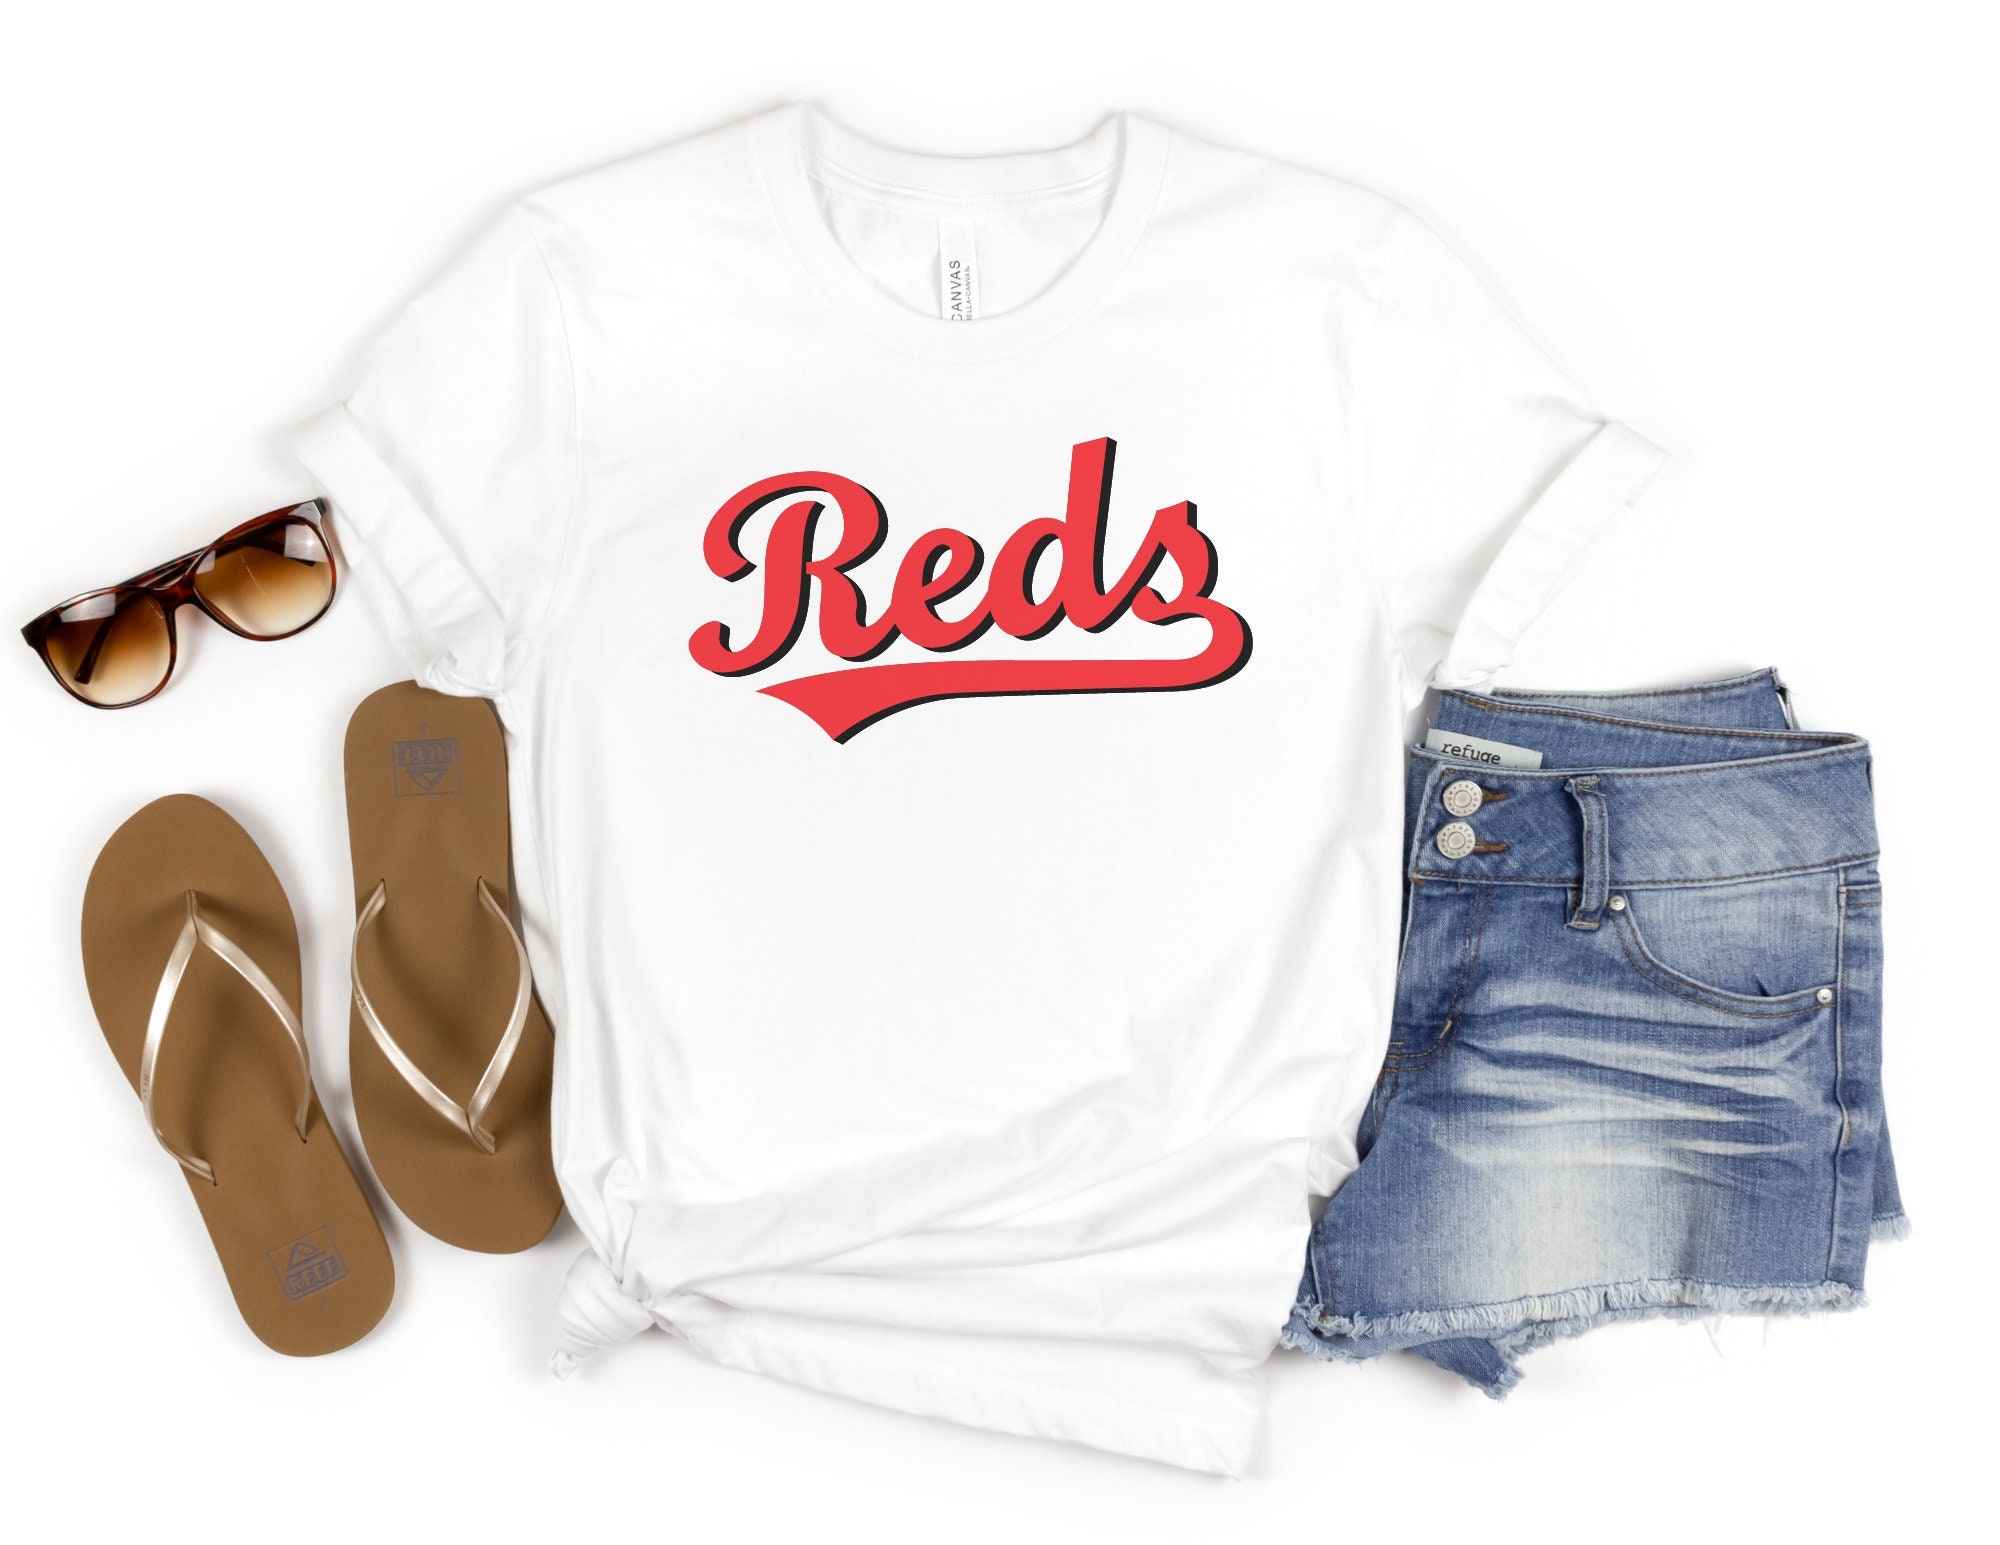  Cincinnati Reds Adult Evolution Color T-Shirt (Small